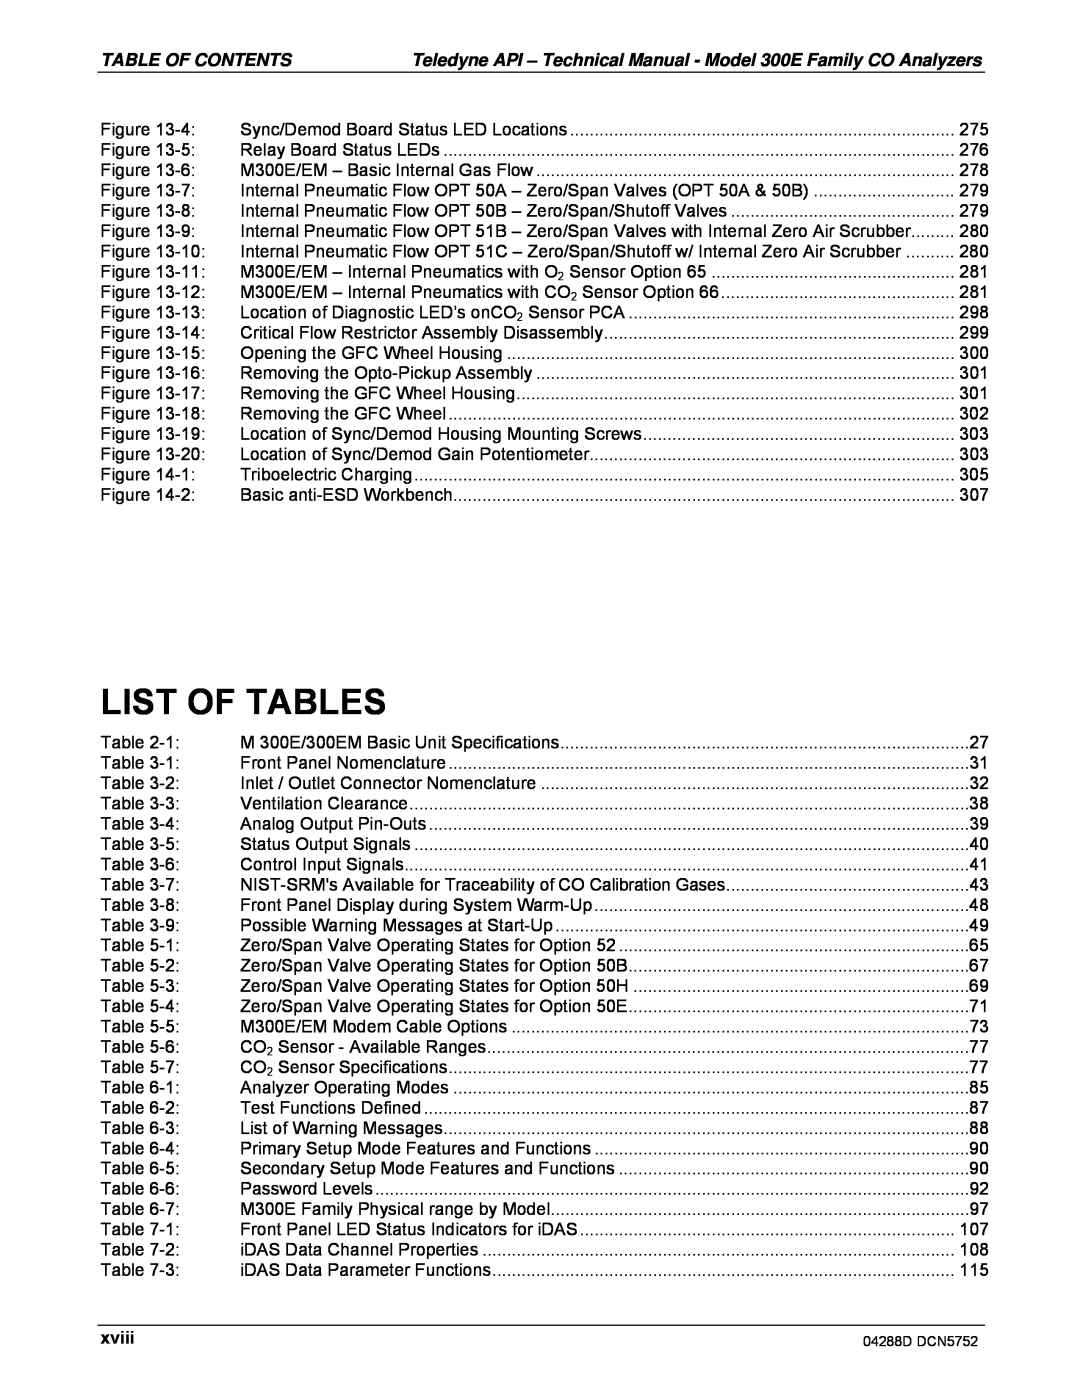 Teledyne M300EM operation manual List Of Tables, xviii 